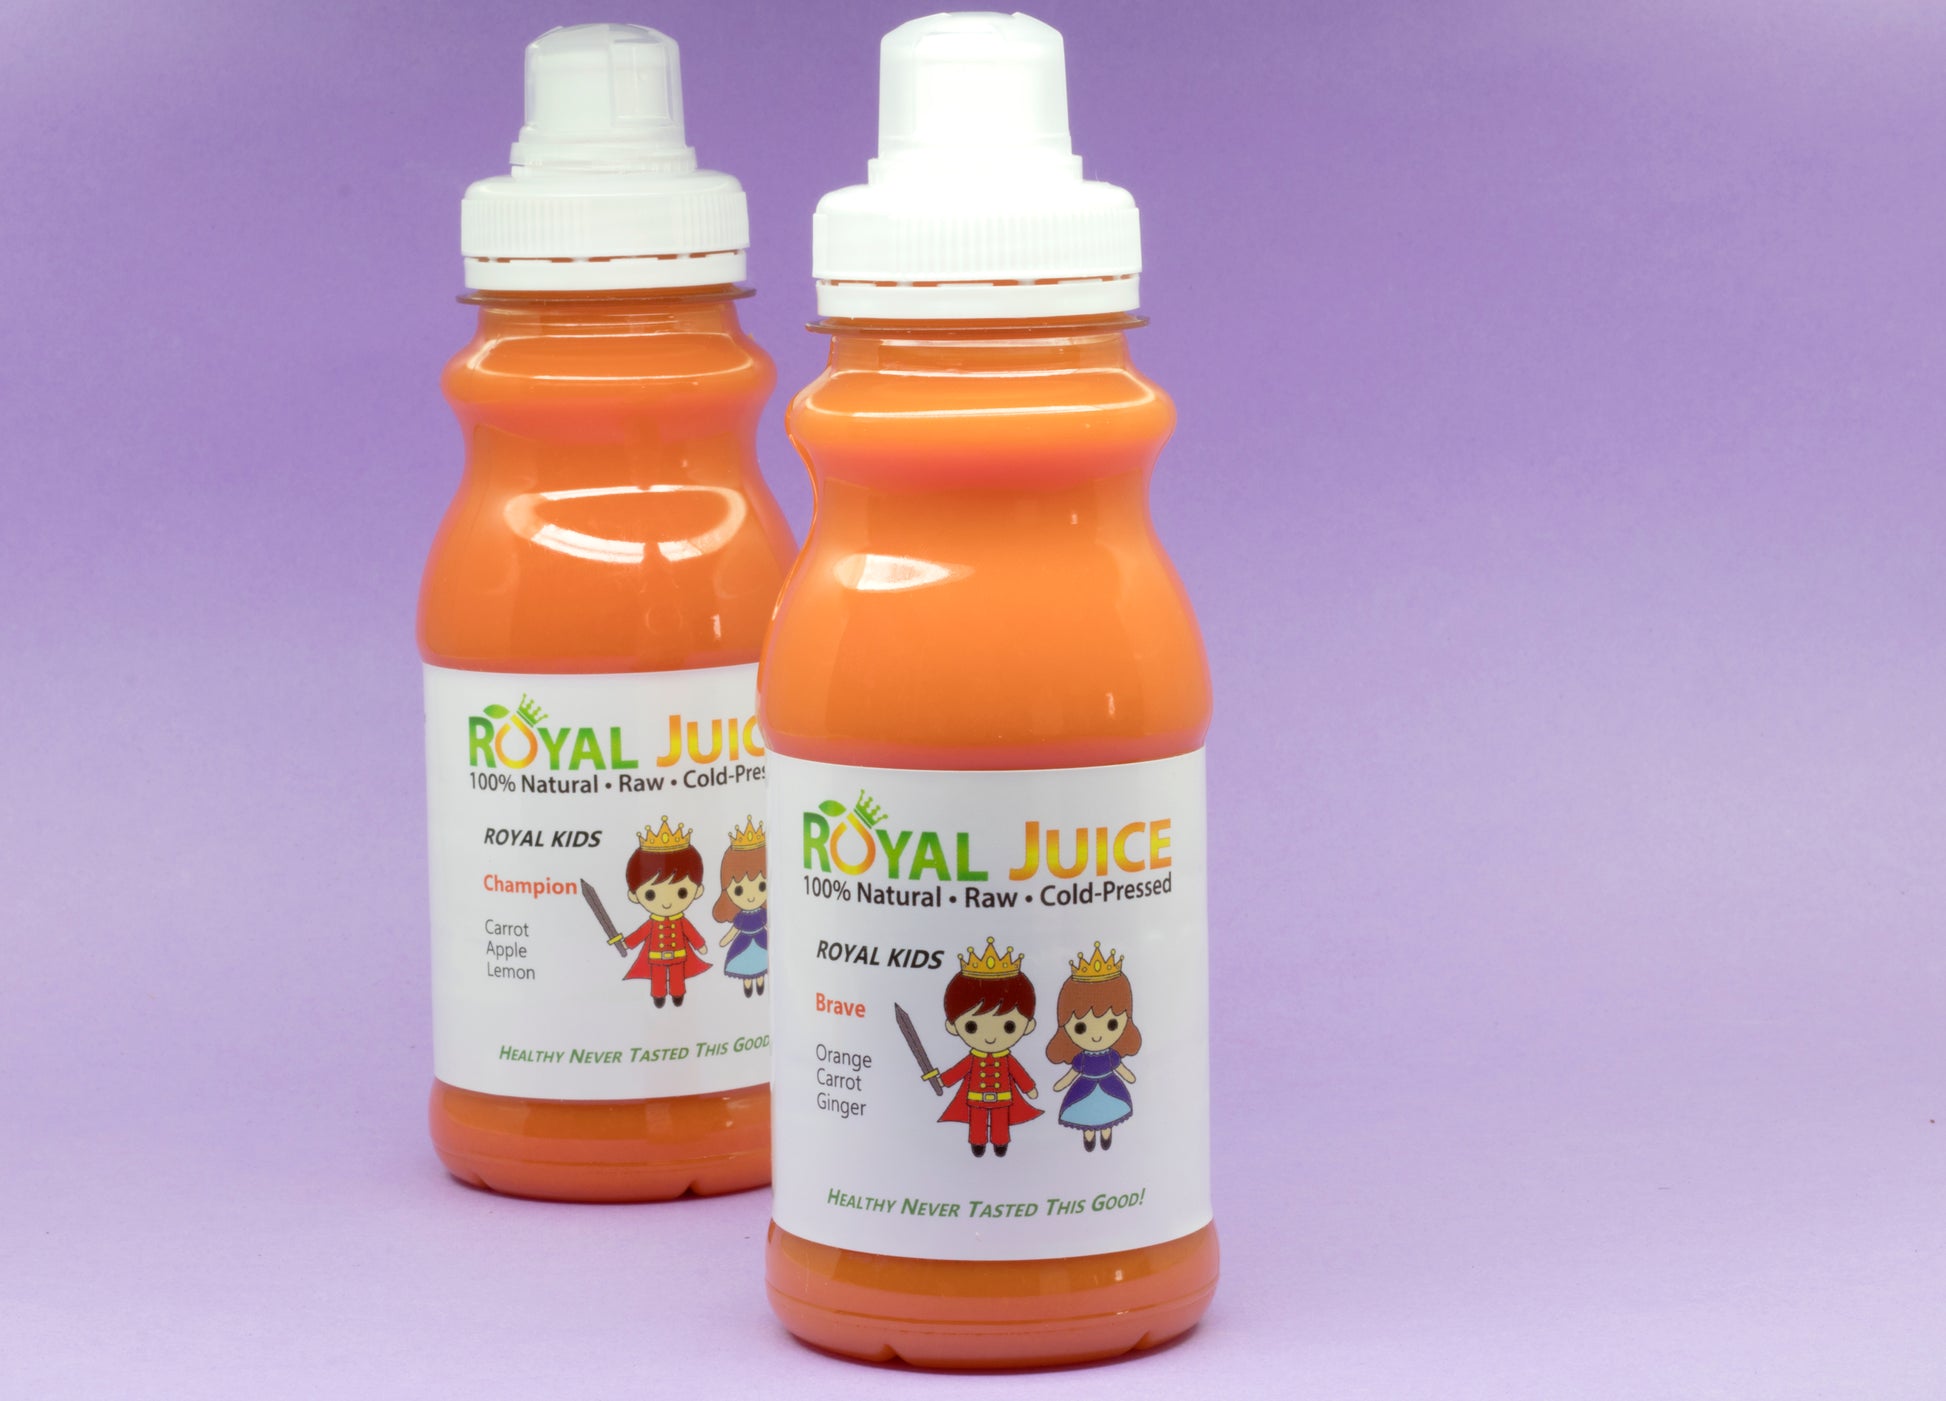 30 Days Royal Kids Juice Pack - Royal Juice